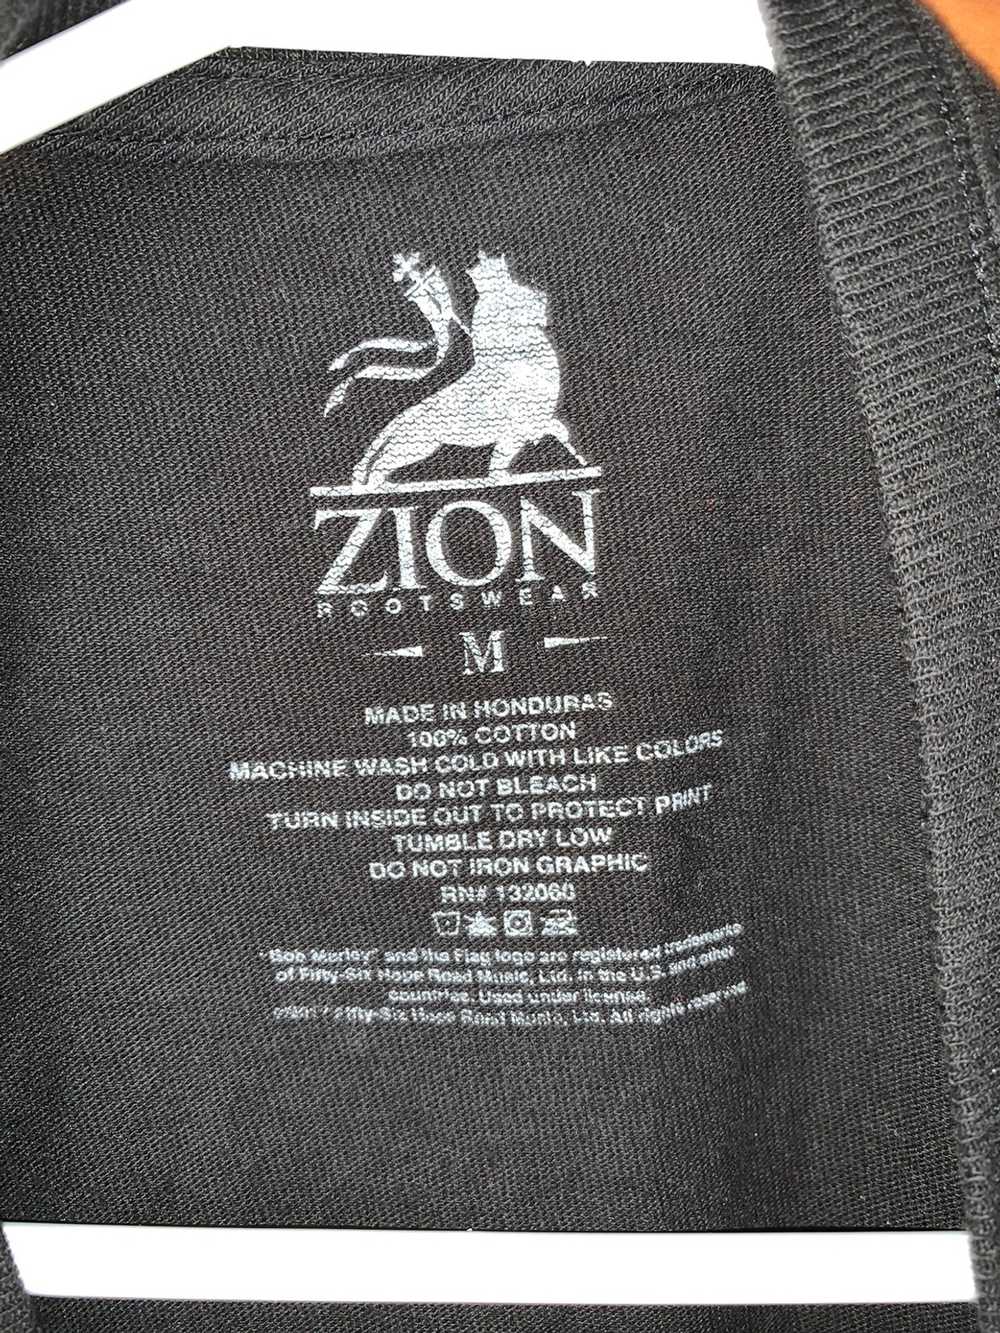 Zion Rootswear Bob Marley Zion Rootswear T-Shirt - image 2